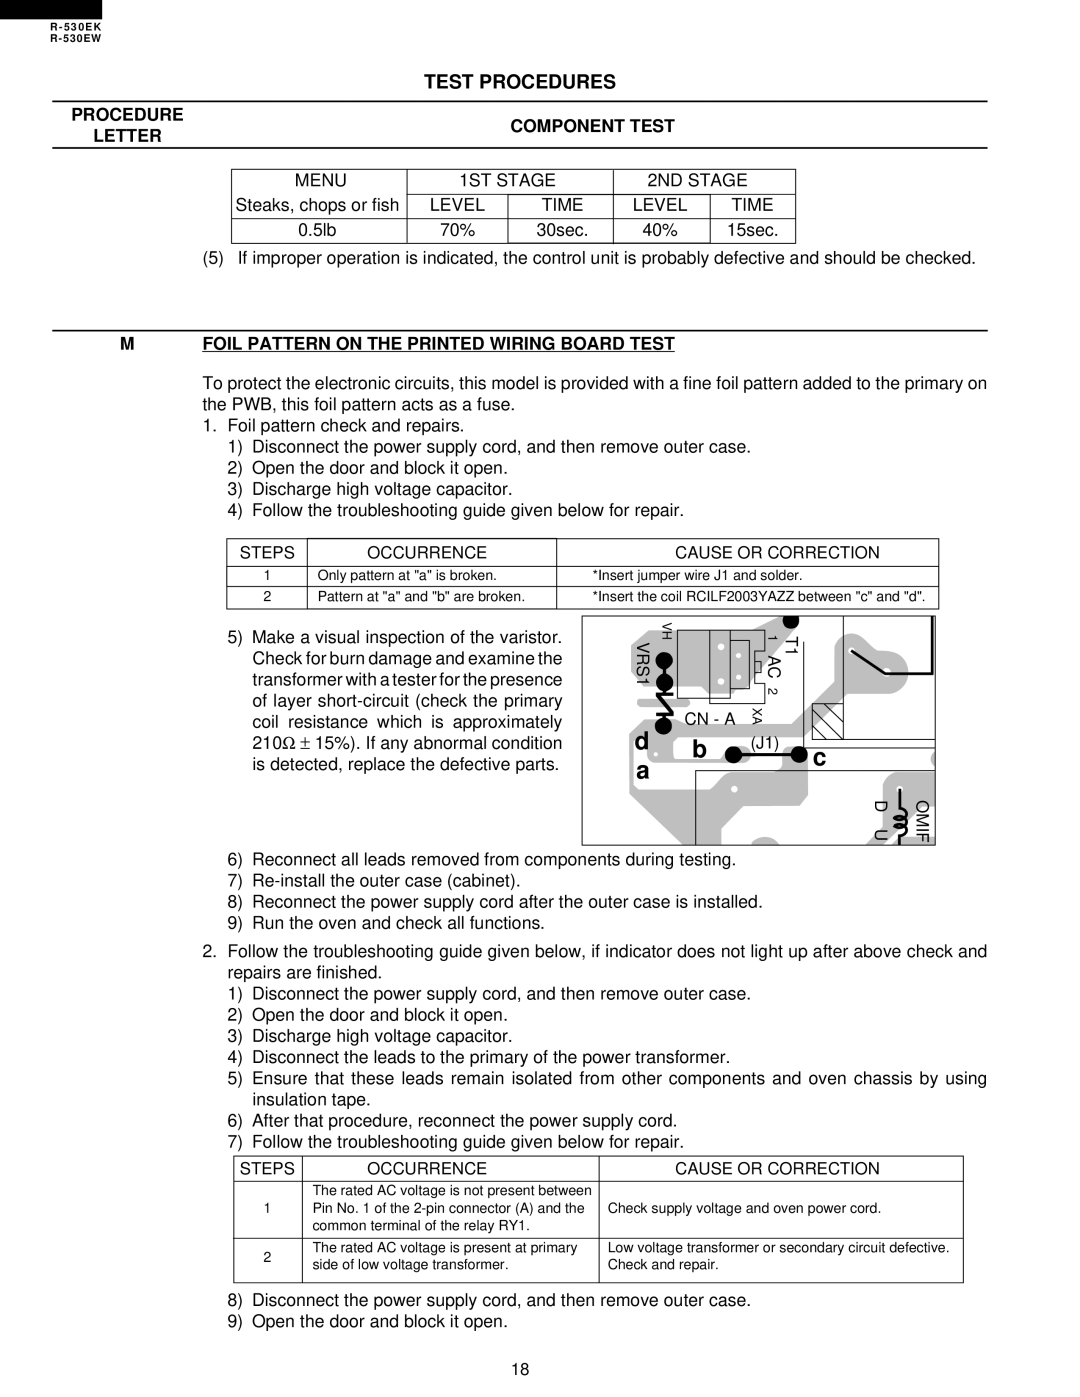 Sharp R-530EK service manual Test Procedures, Component Test, Letter, M Foil Pattern On The Printed Wiring Board Test 